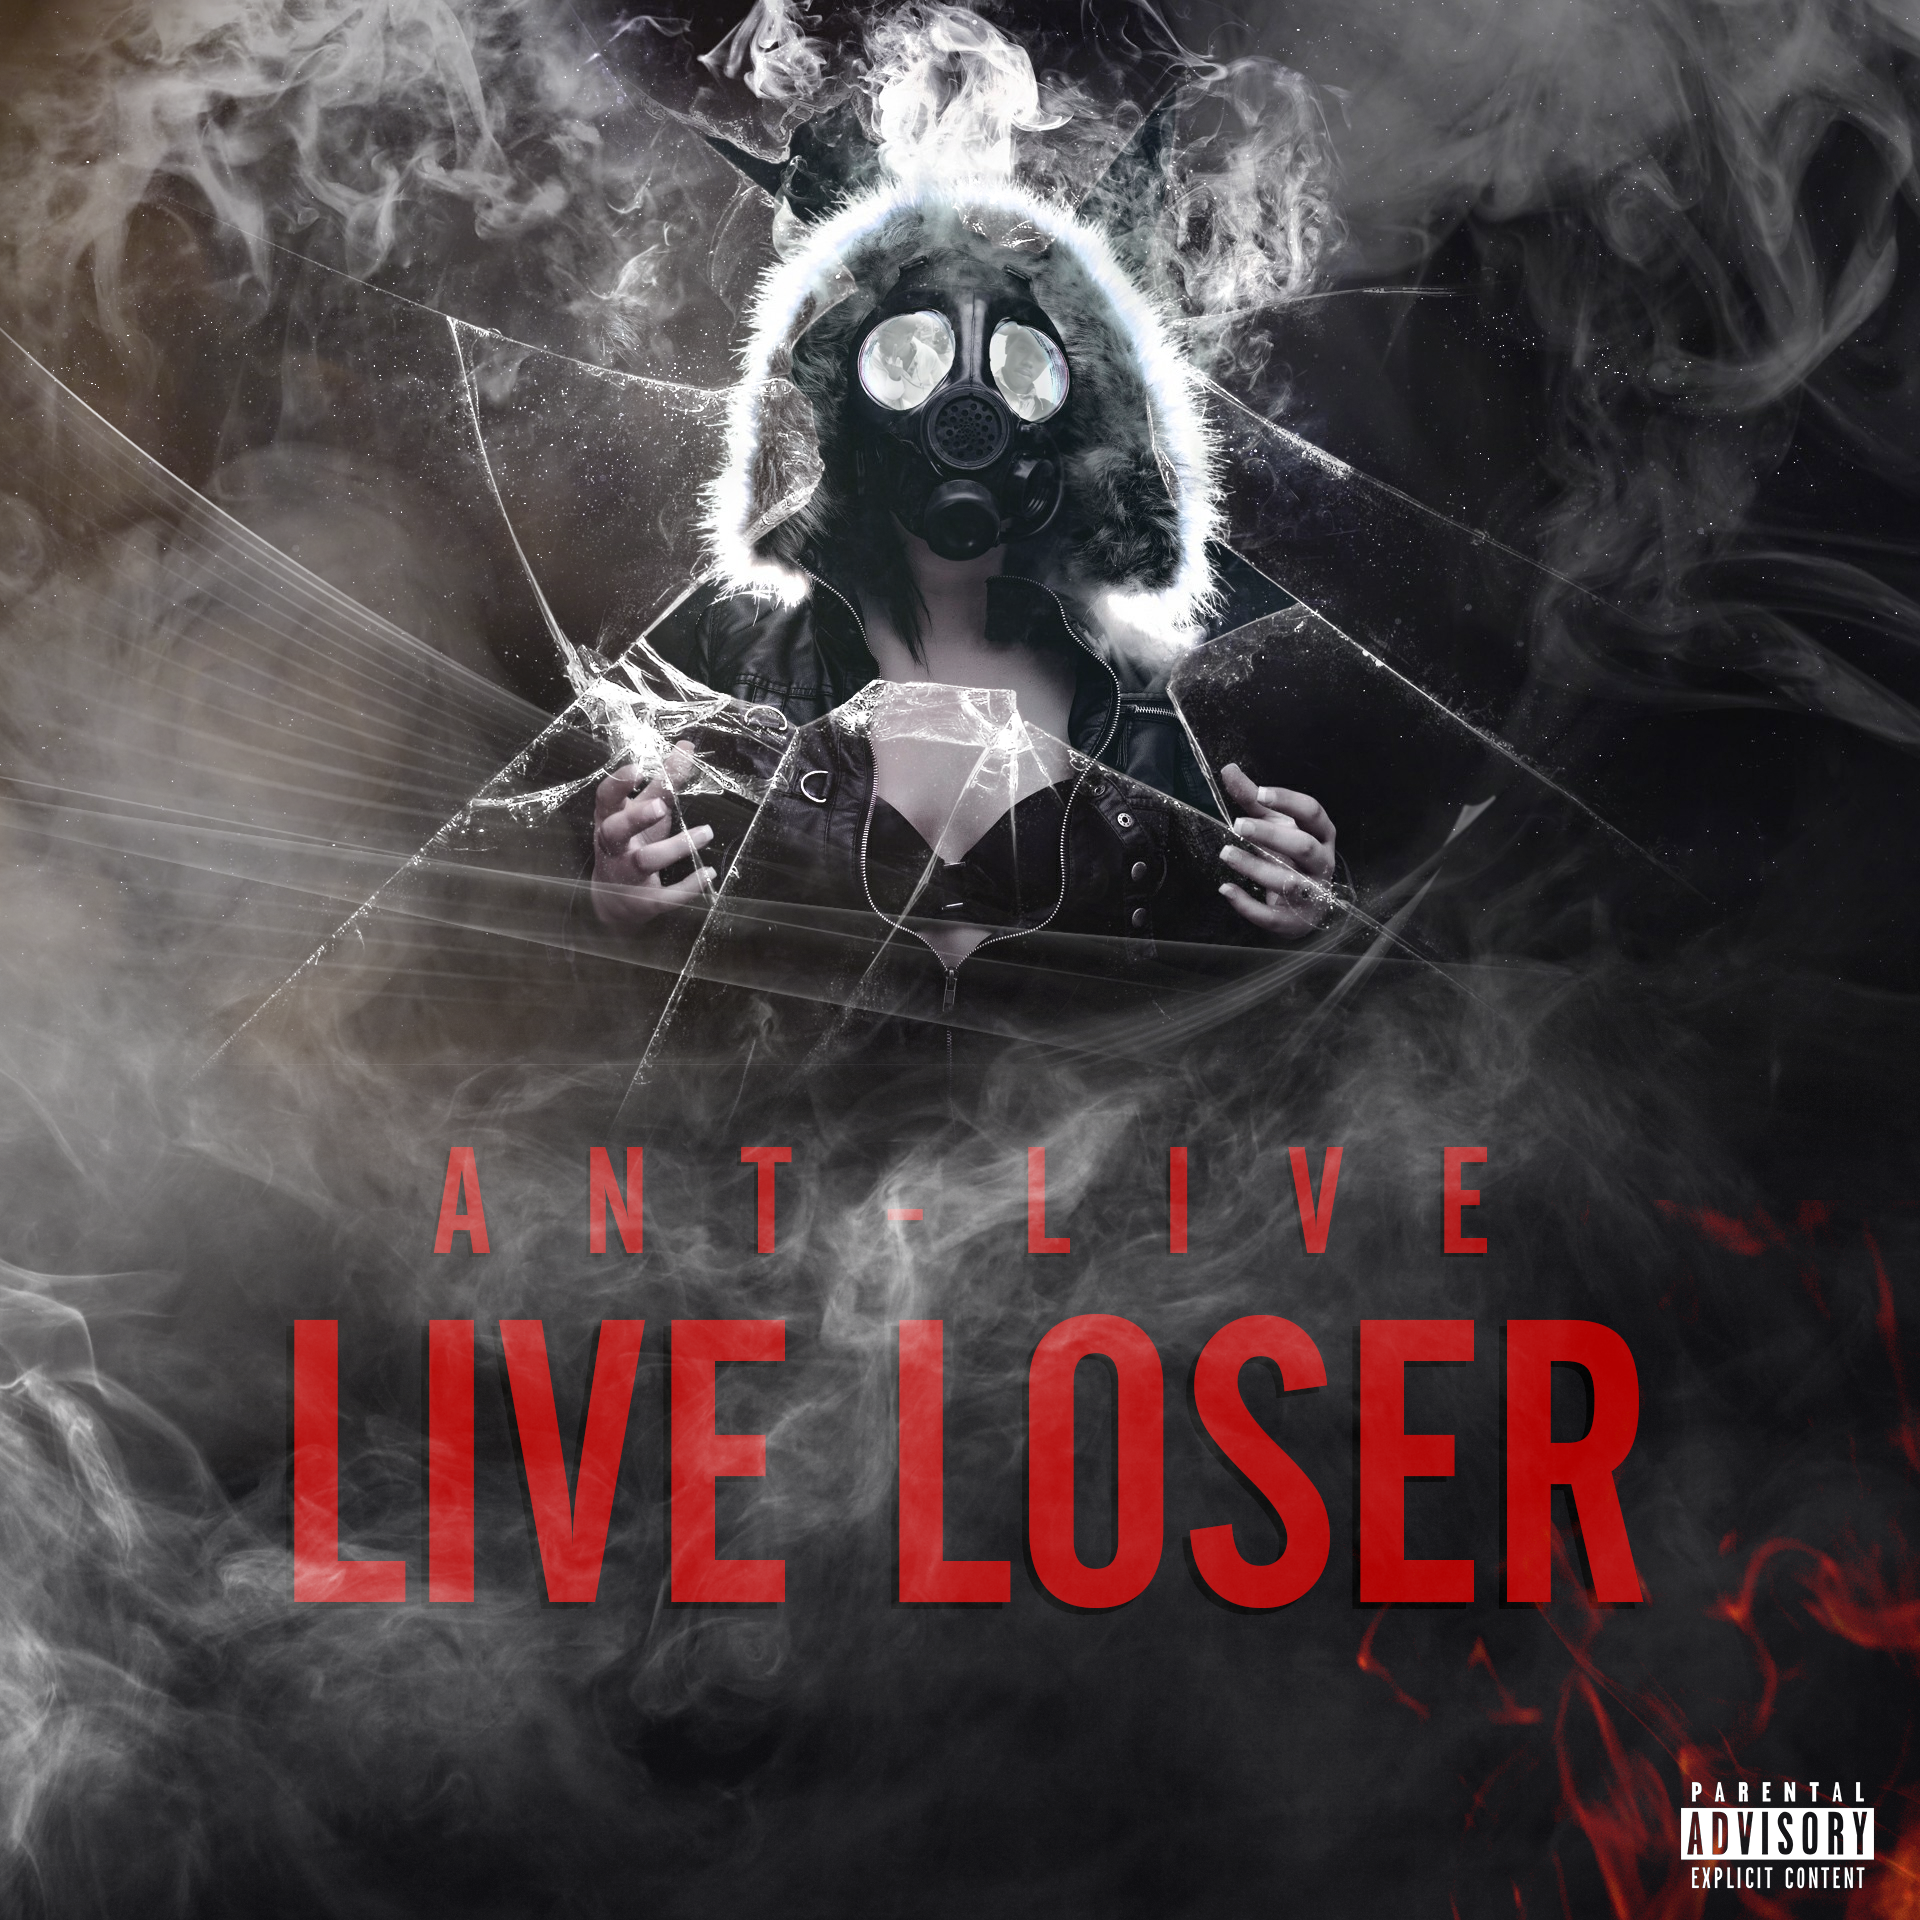 Ant-Live: Live Loser box cover